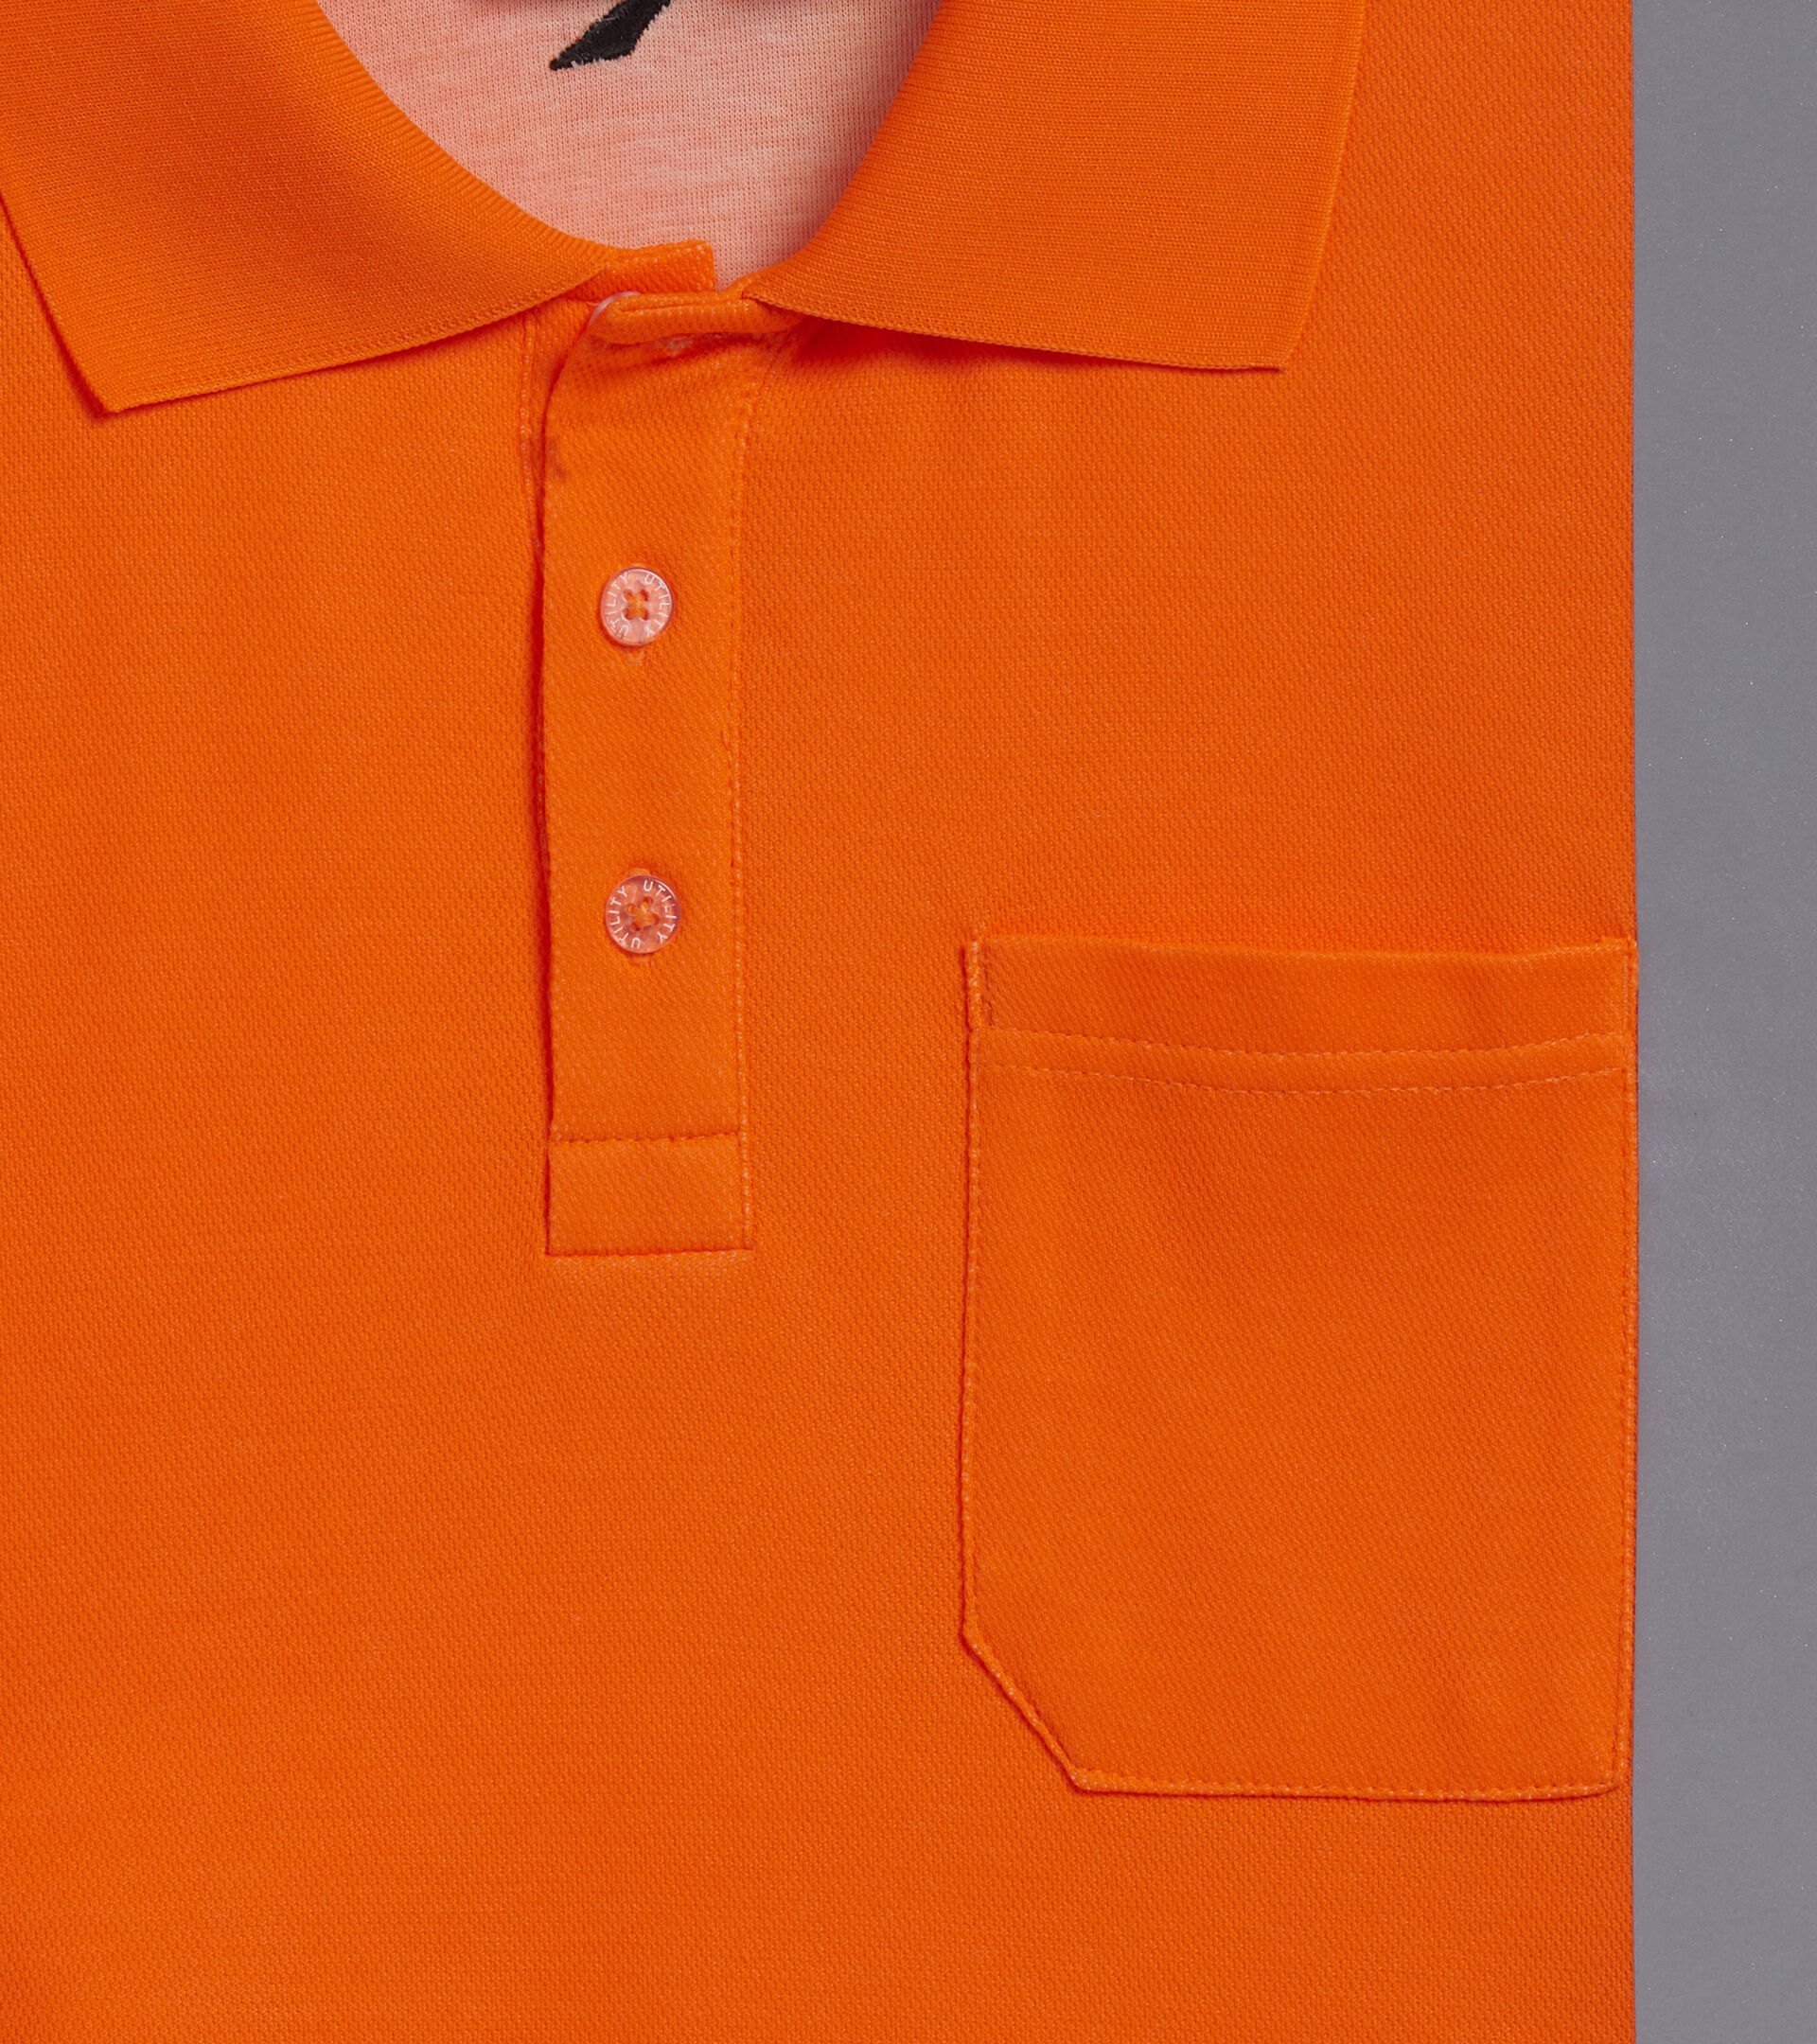 Short-sleeved work polo shirt POLO MC HV ISO 20471 FLUORESCENT ORANGE ISO20471 - Utility